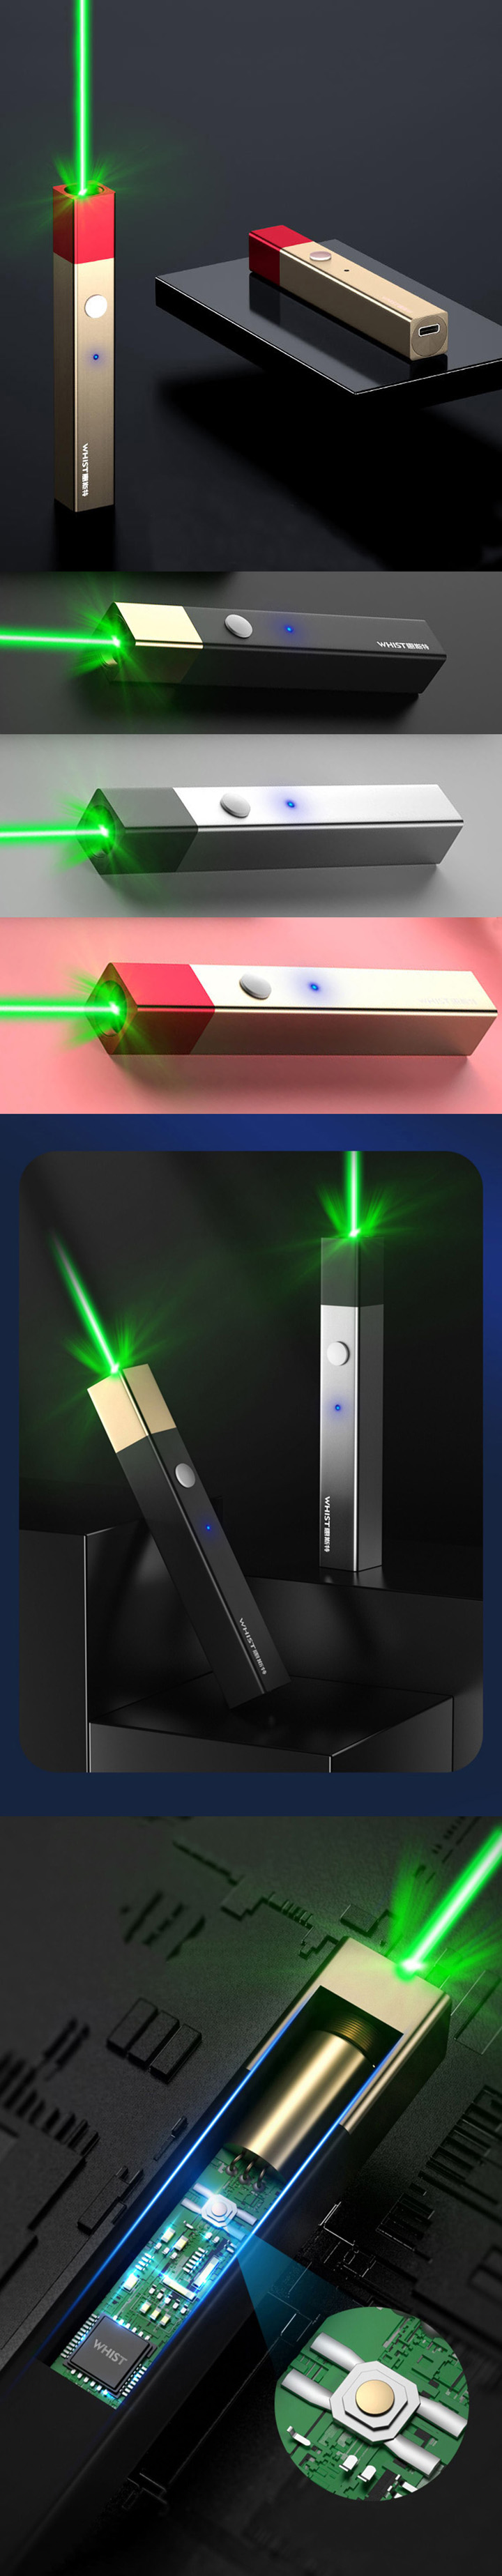 Puntatore laser verde ricaricabile USB